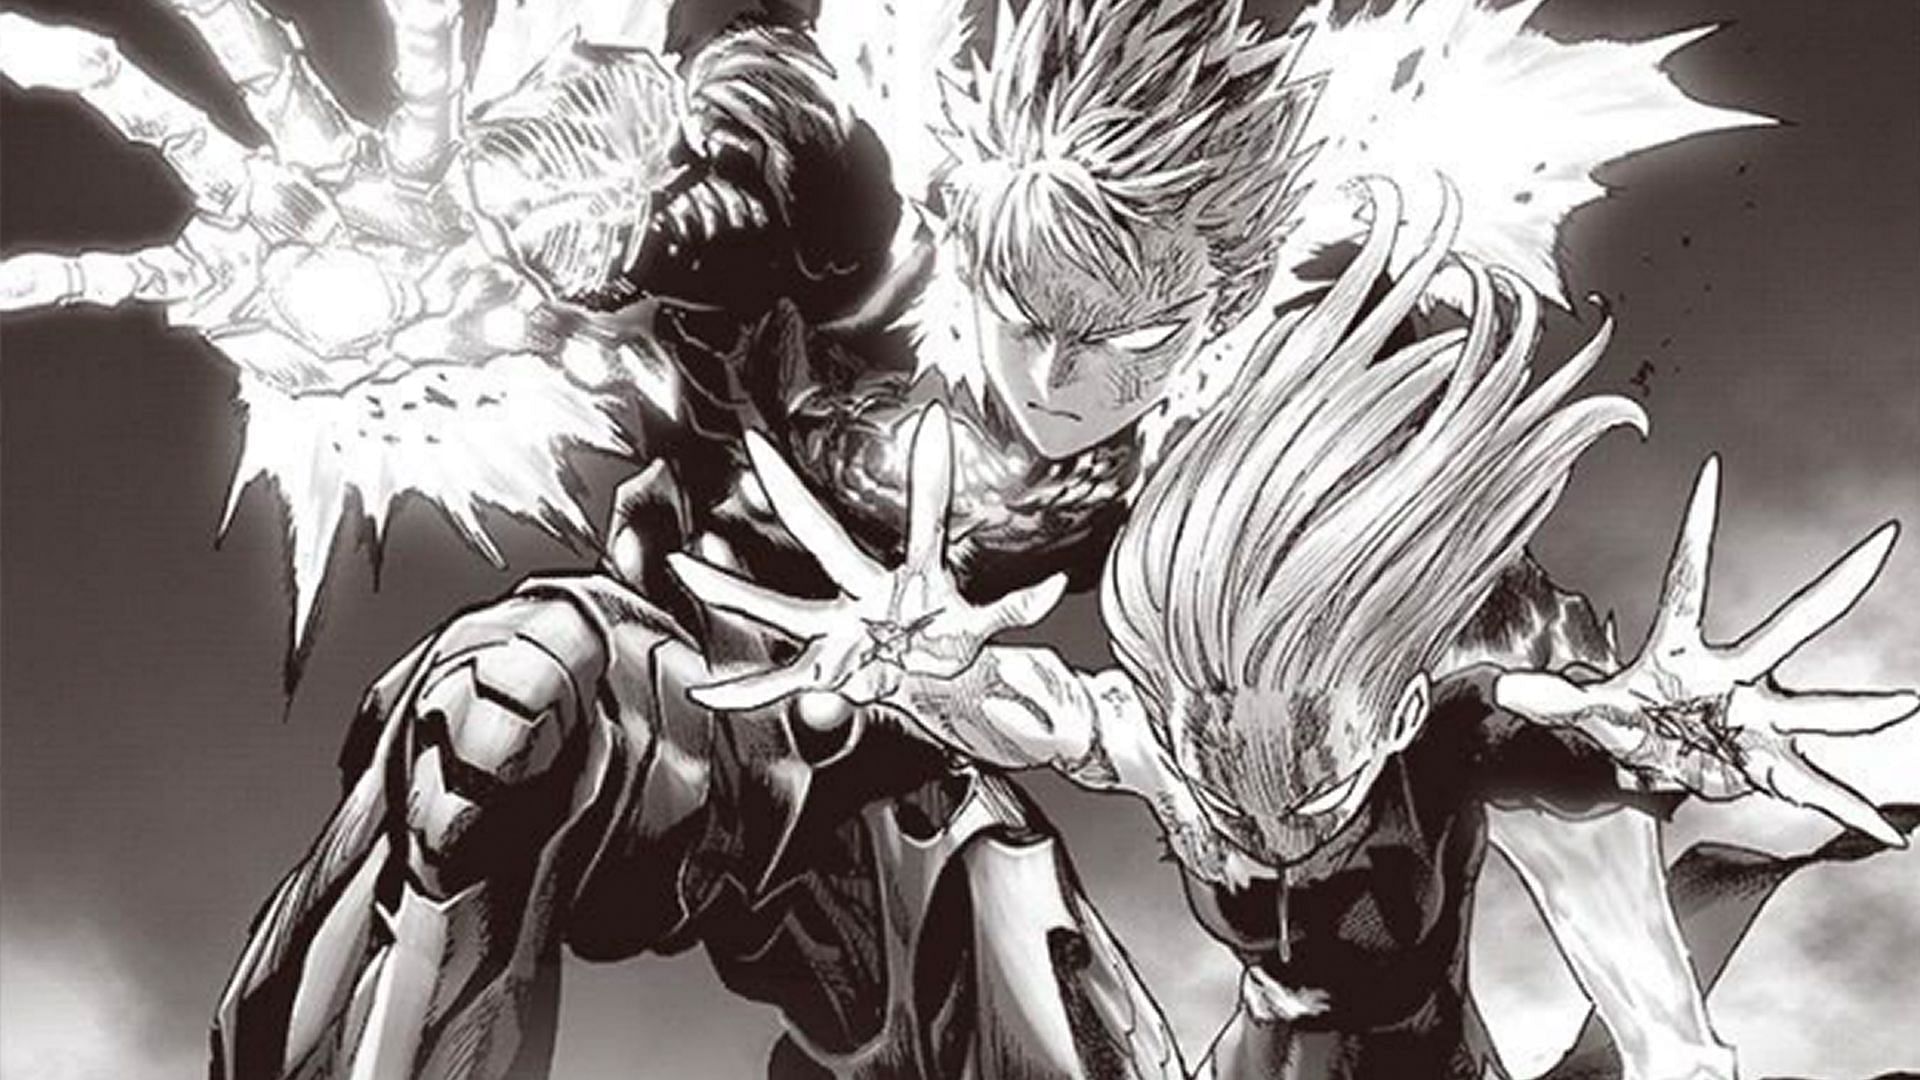 Genos and Tatsumaki fight together (Image via Viz Media)